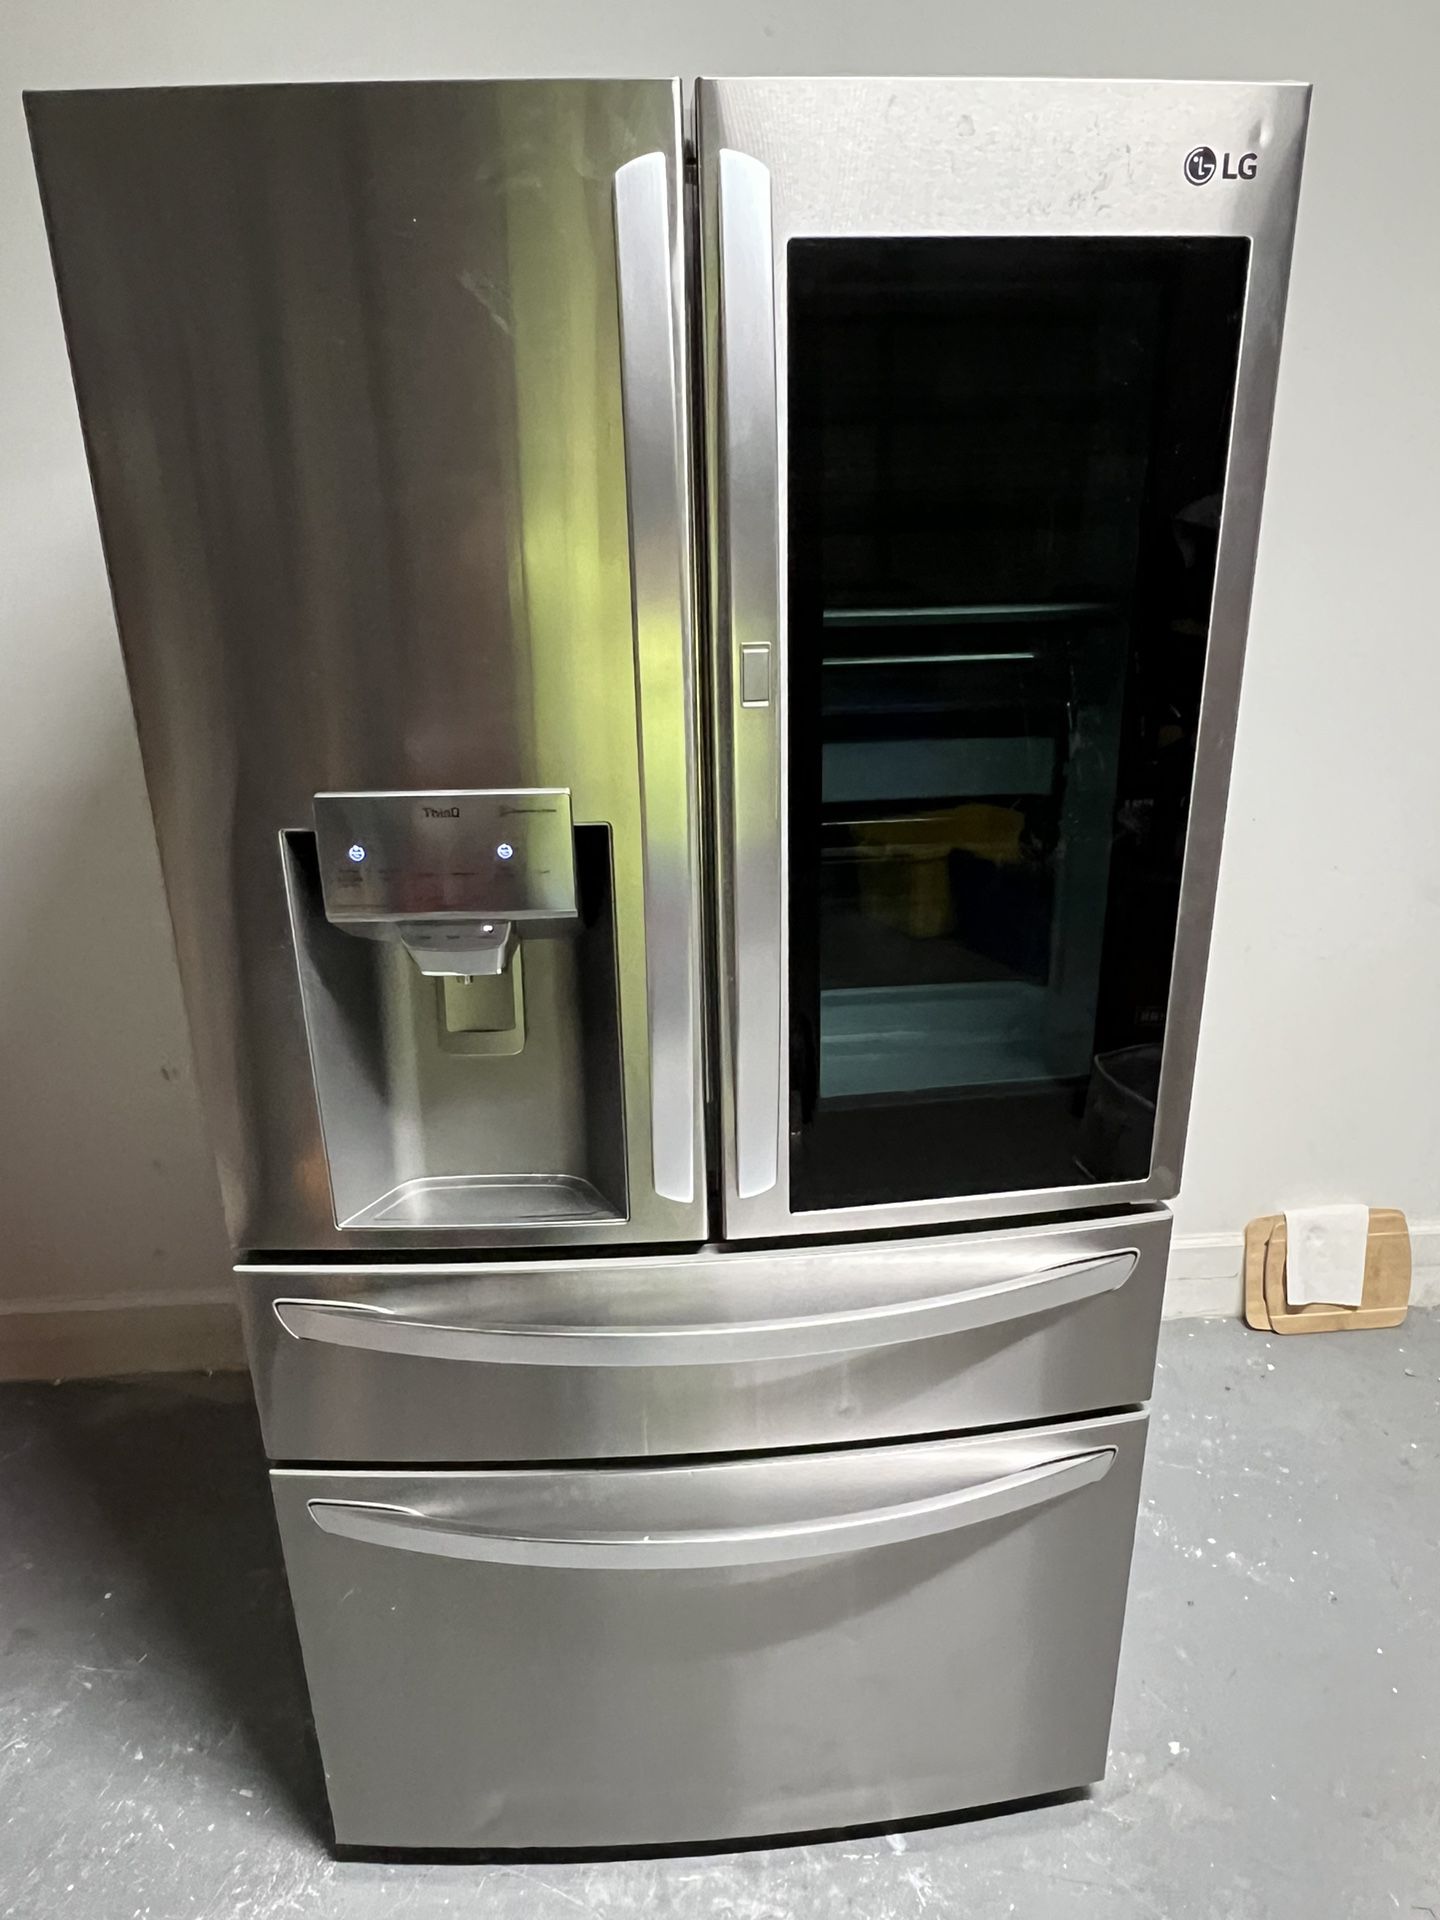 LG Refrigerator, Bottom Freezer and Ice Maker, New Water Filter